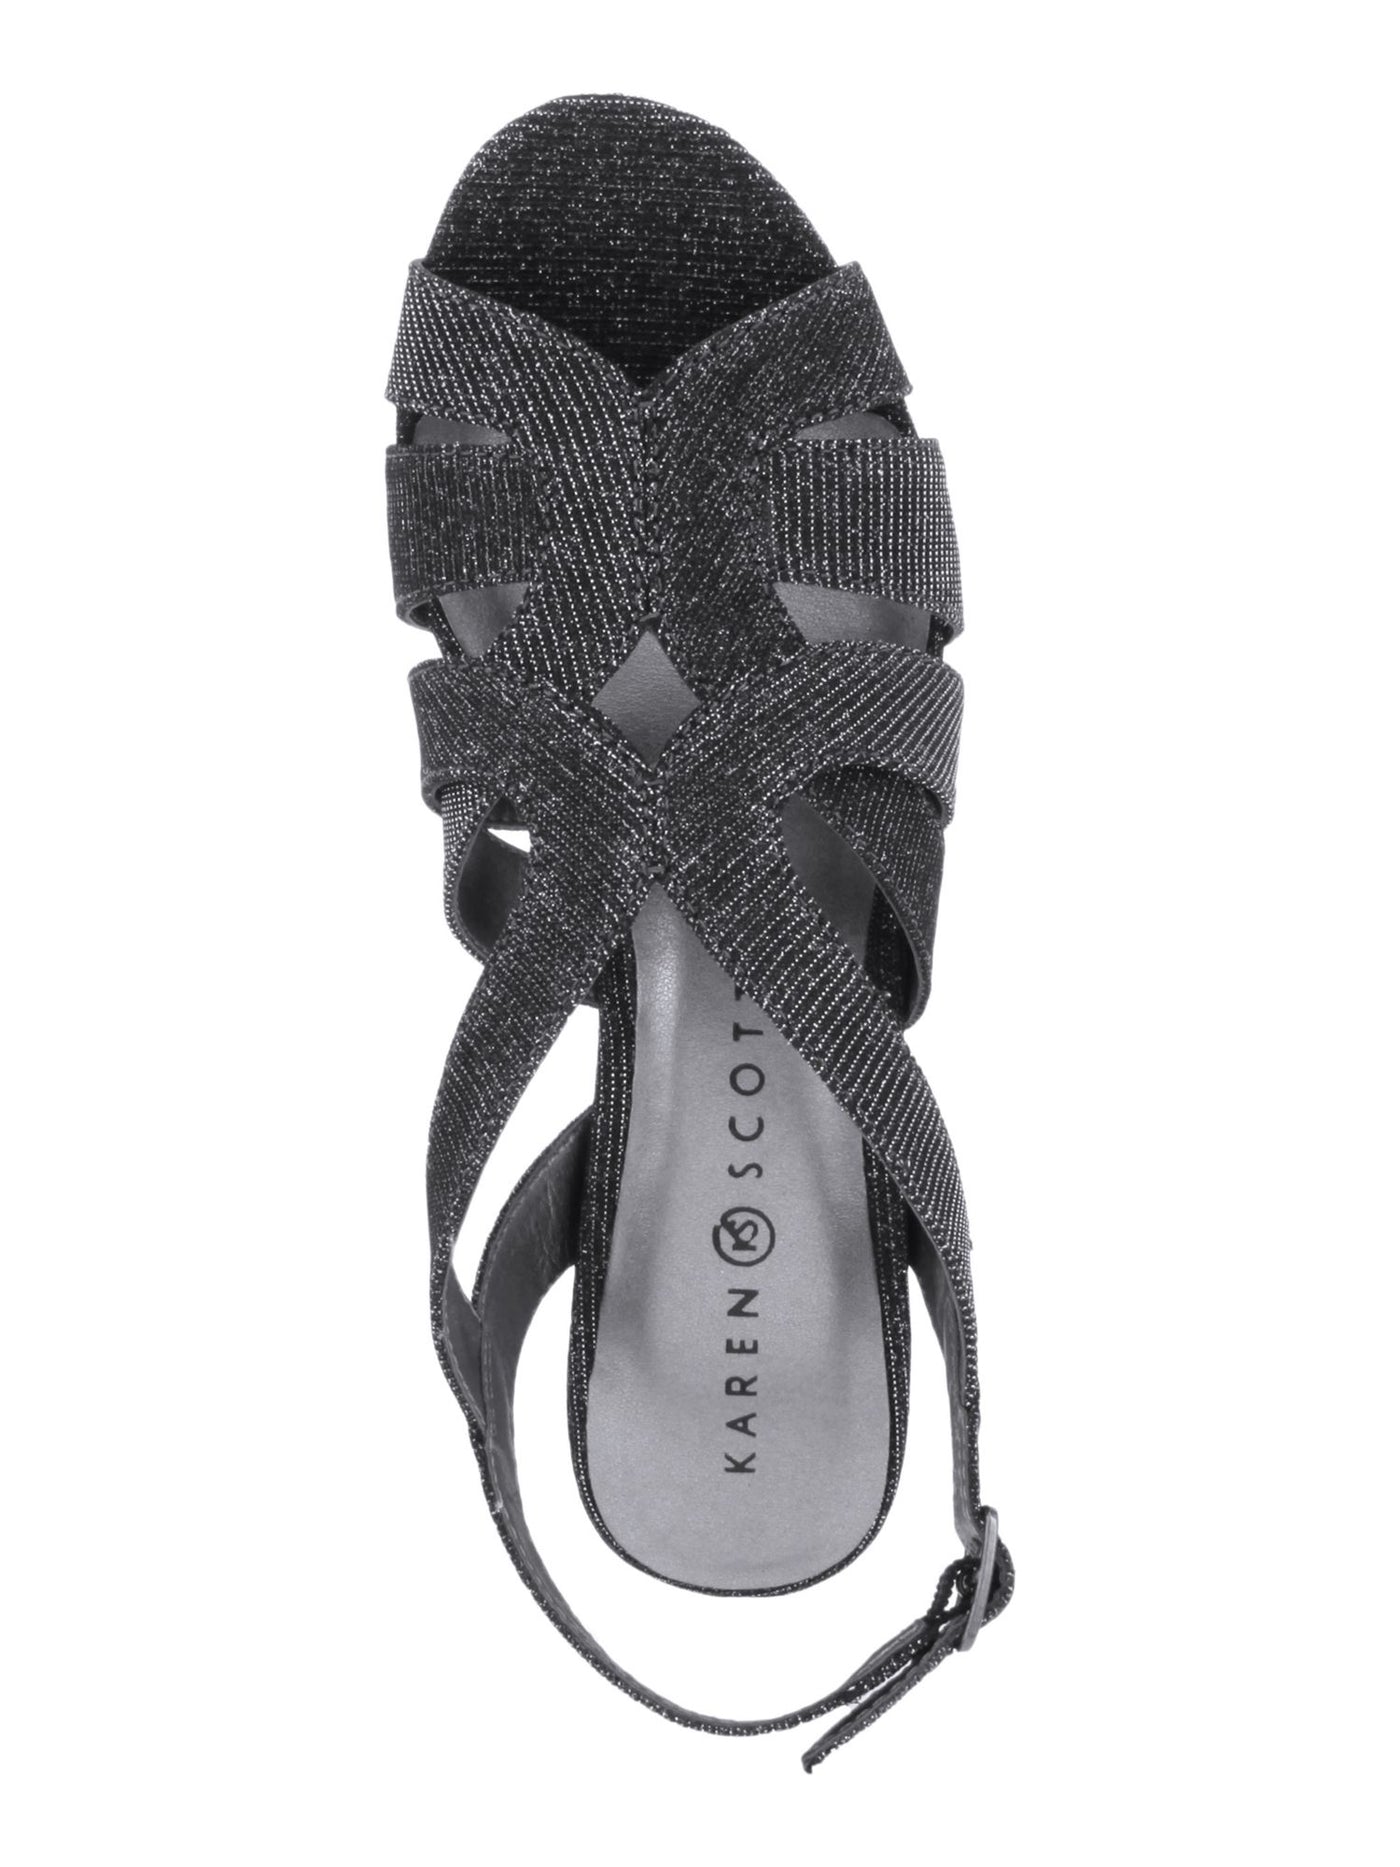 KAREN SCOTT Womens Gray Glitter Cushioned Belindah Peep Toe Stiletto Buckle Dress Sandals Shoes 8 M